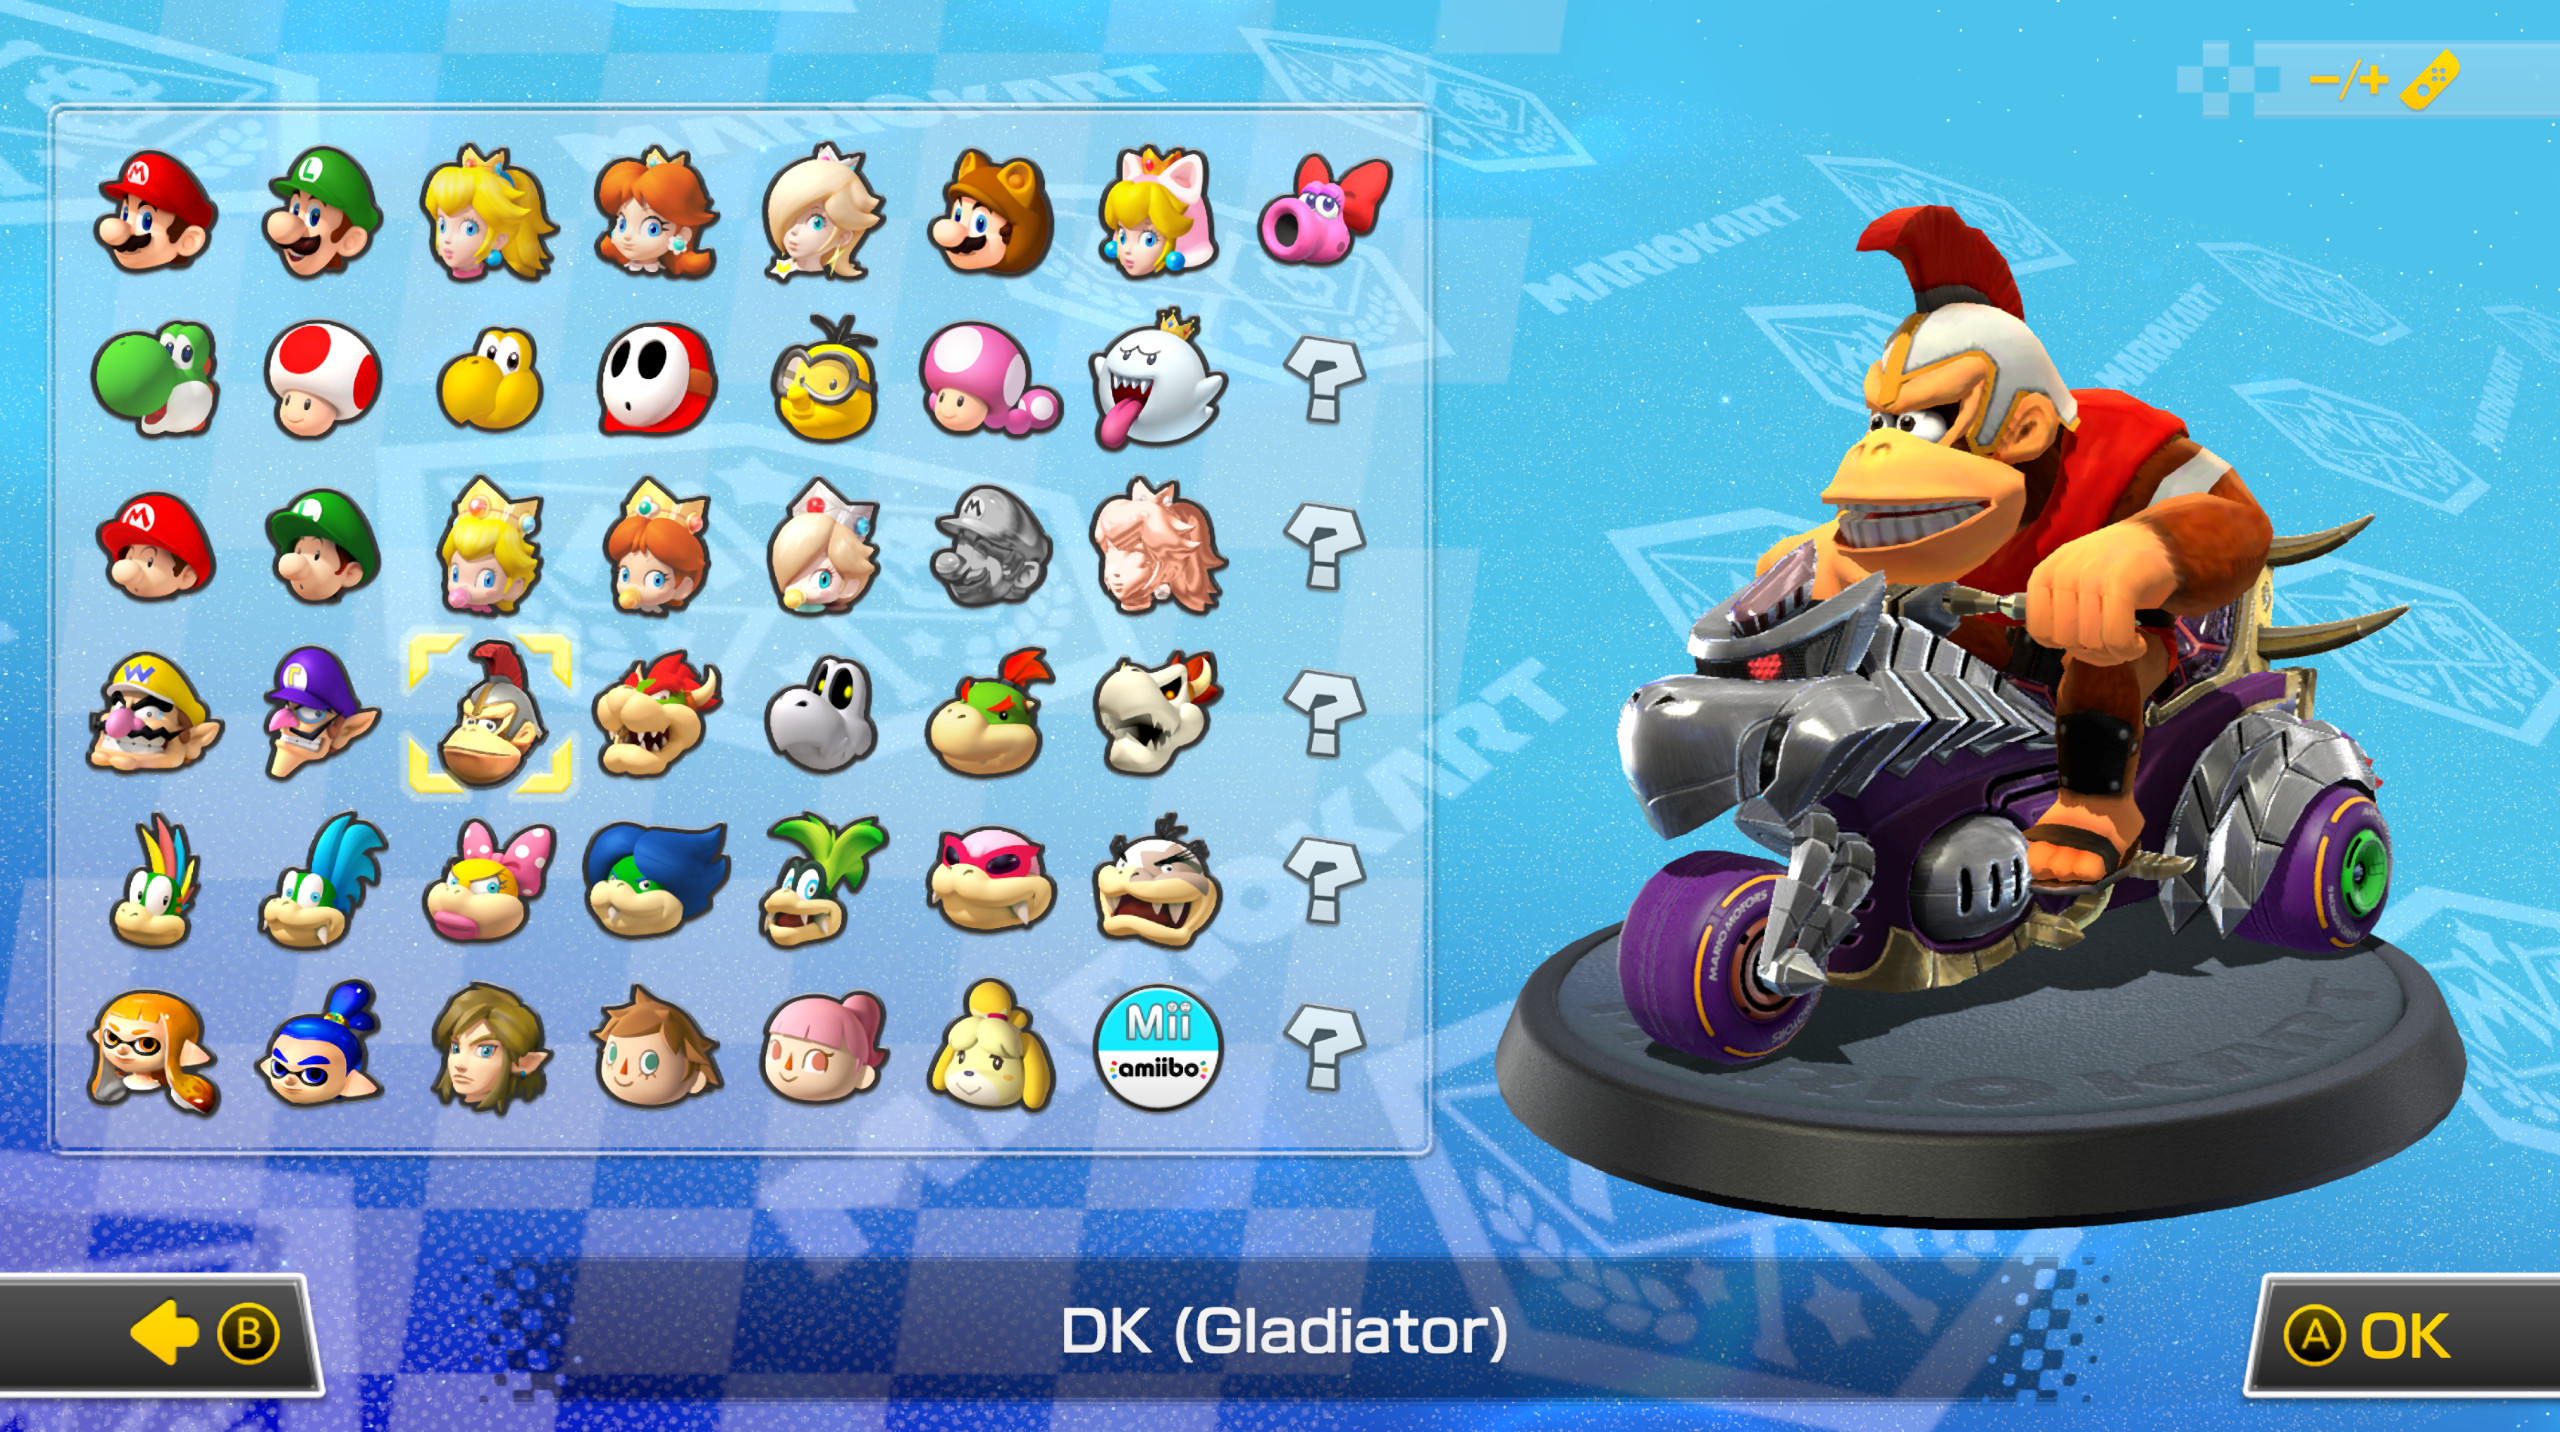 Gladiator DK (Mario Kart Tour Port) [Mario Kart 8 Deluxe] [Mods]